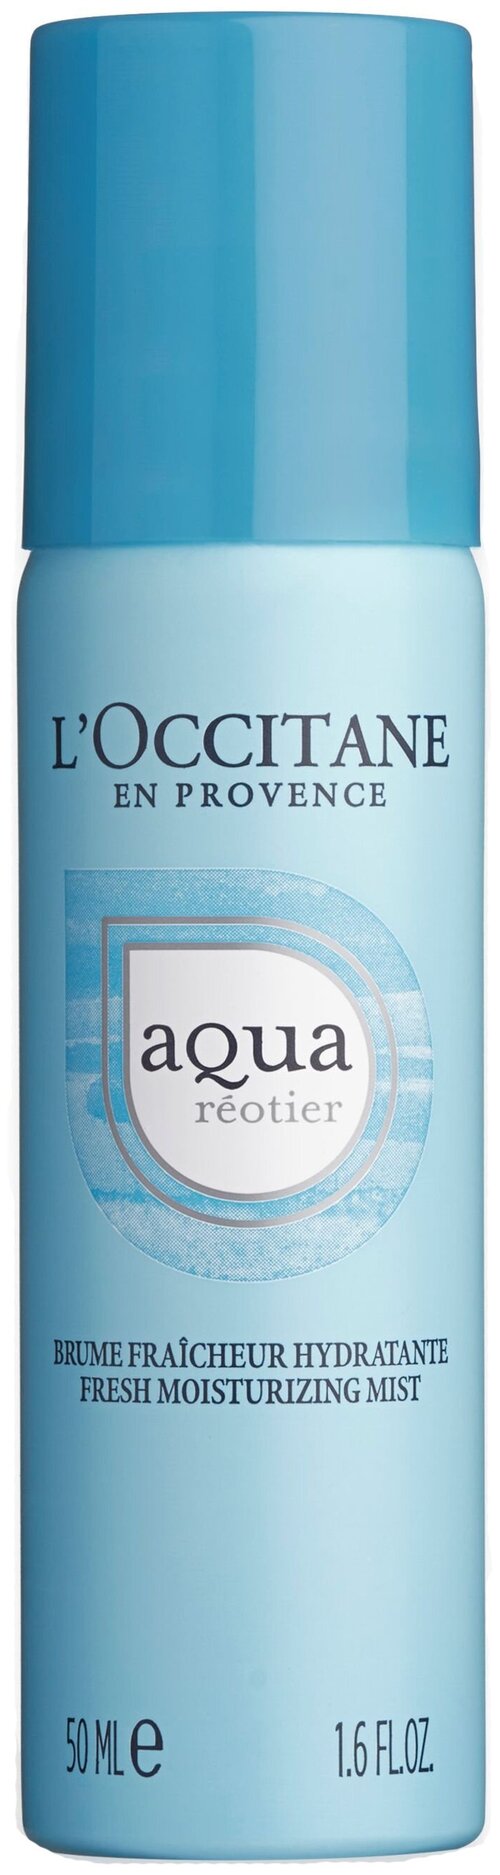 LOccitane en Provence Мист ультраувлажняющий Aqua Reotier, 50 мл